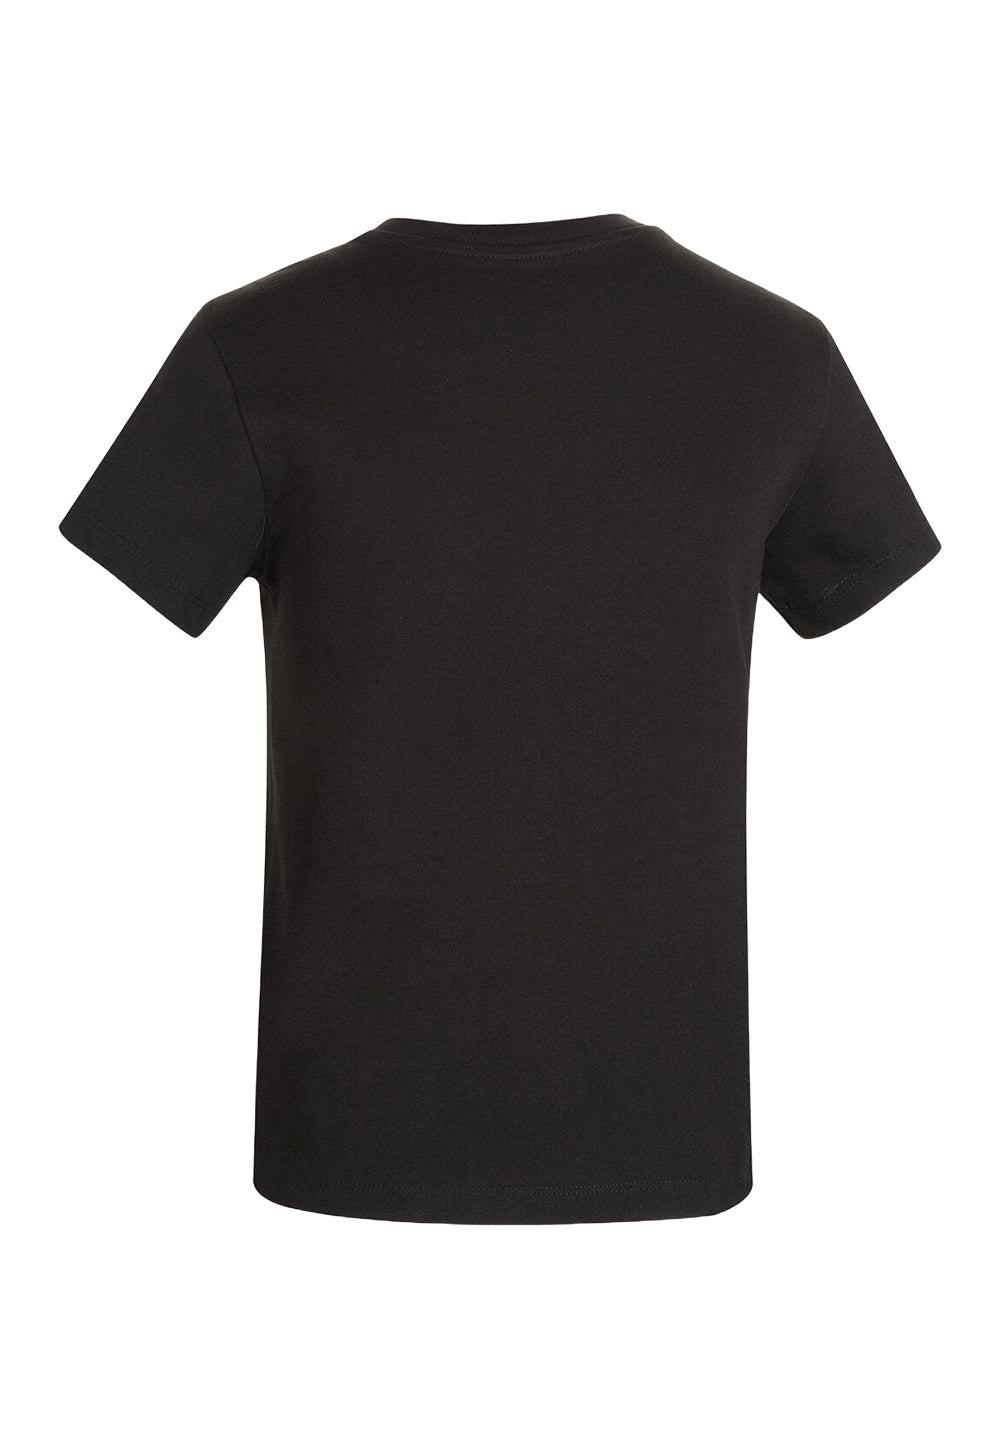 T-shirt nera per bambina - Primamoda kids